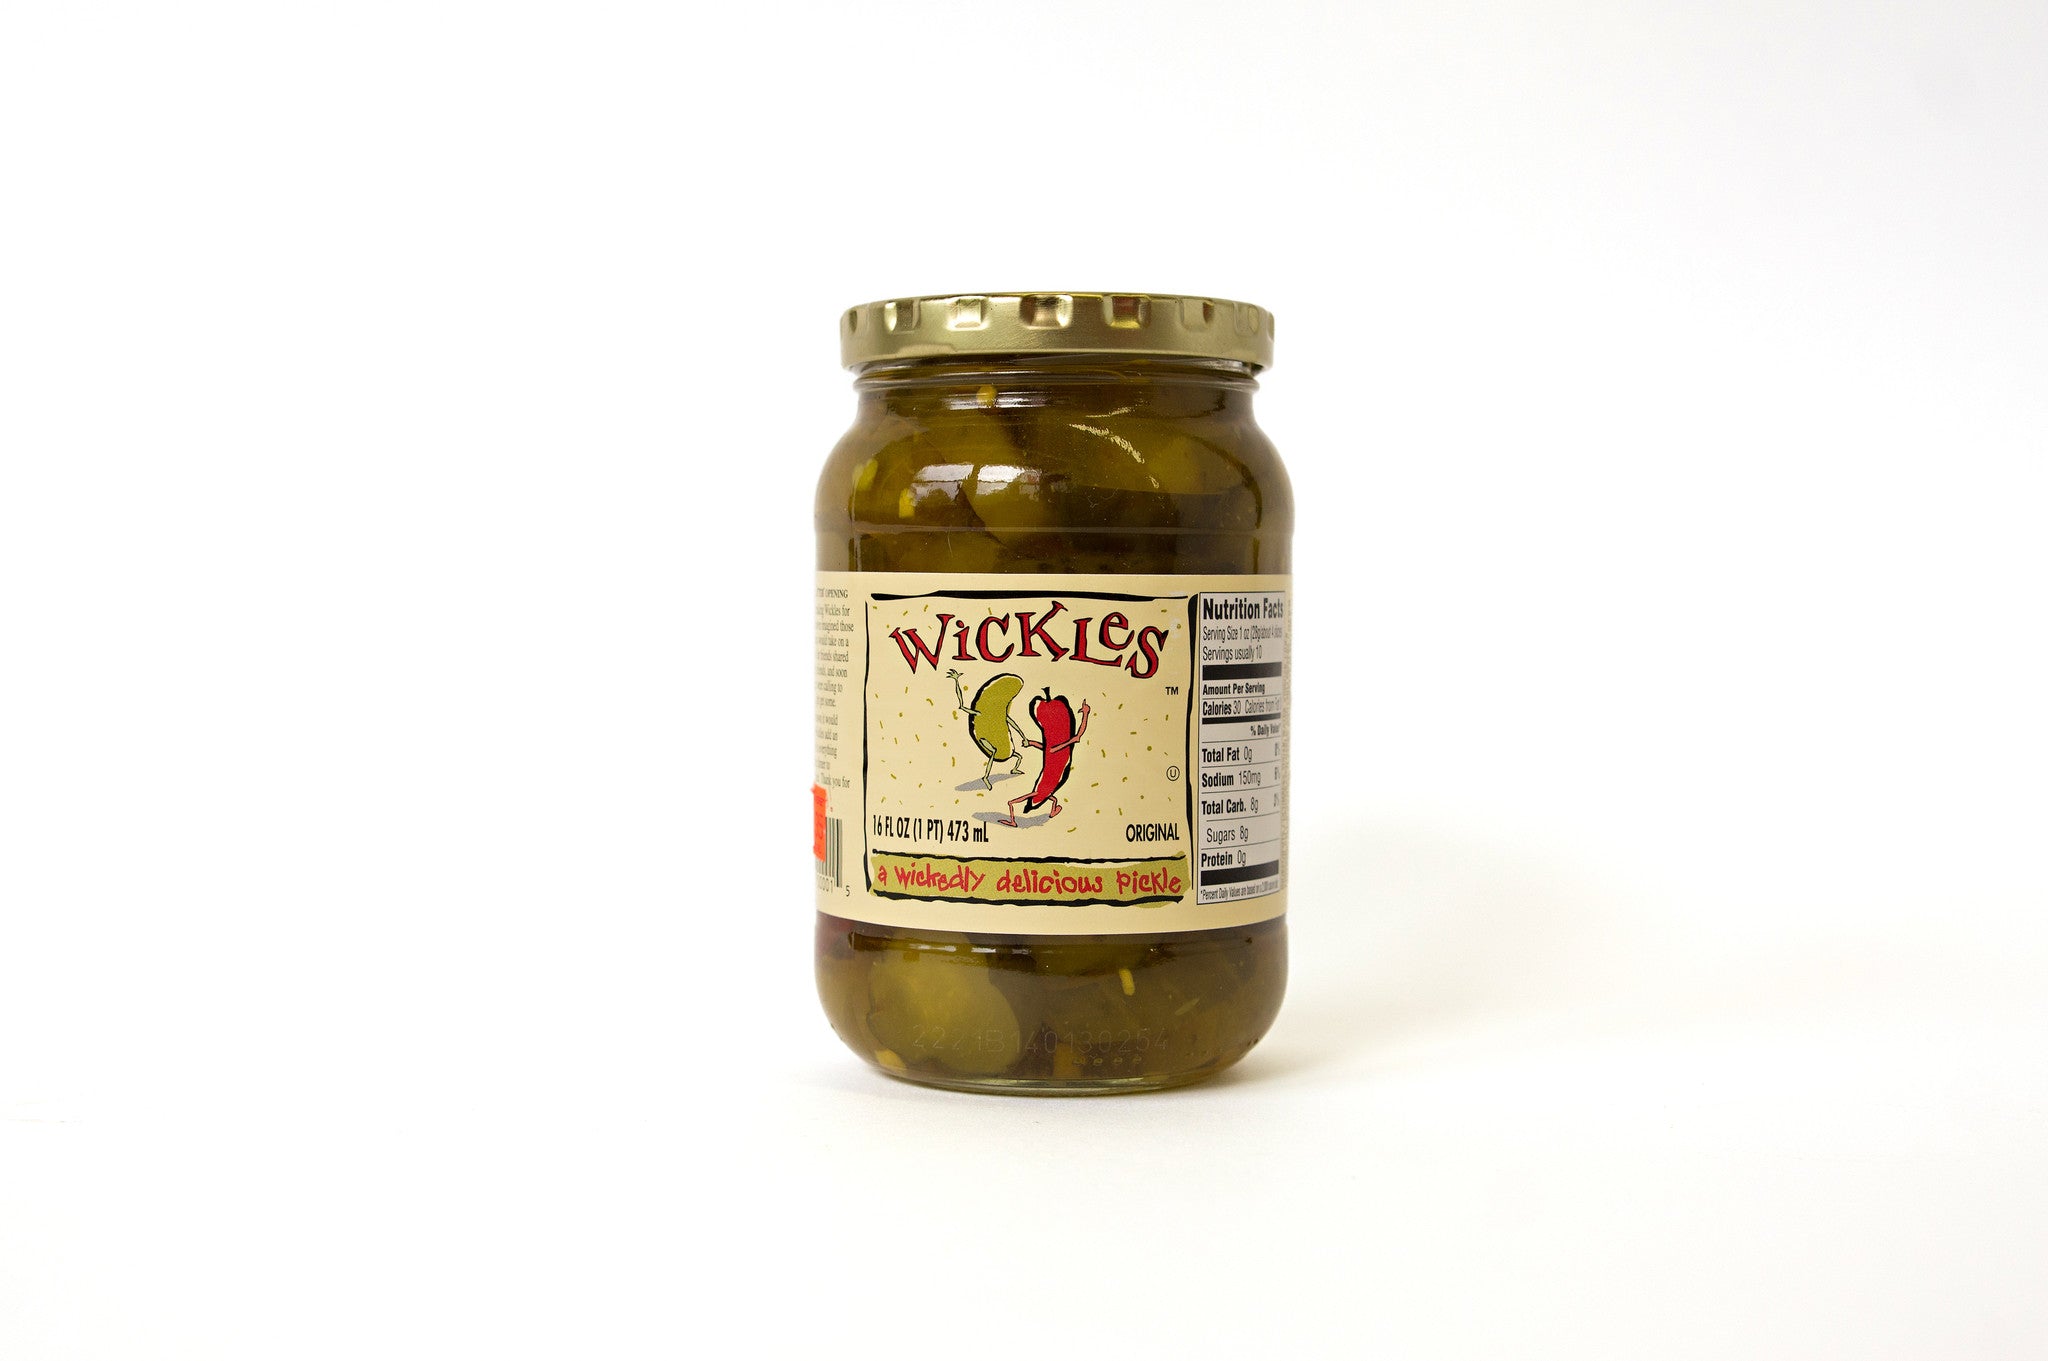 Wickle's Pickles – Robert Is Here, Inc.